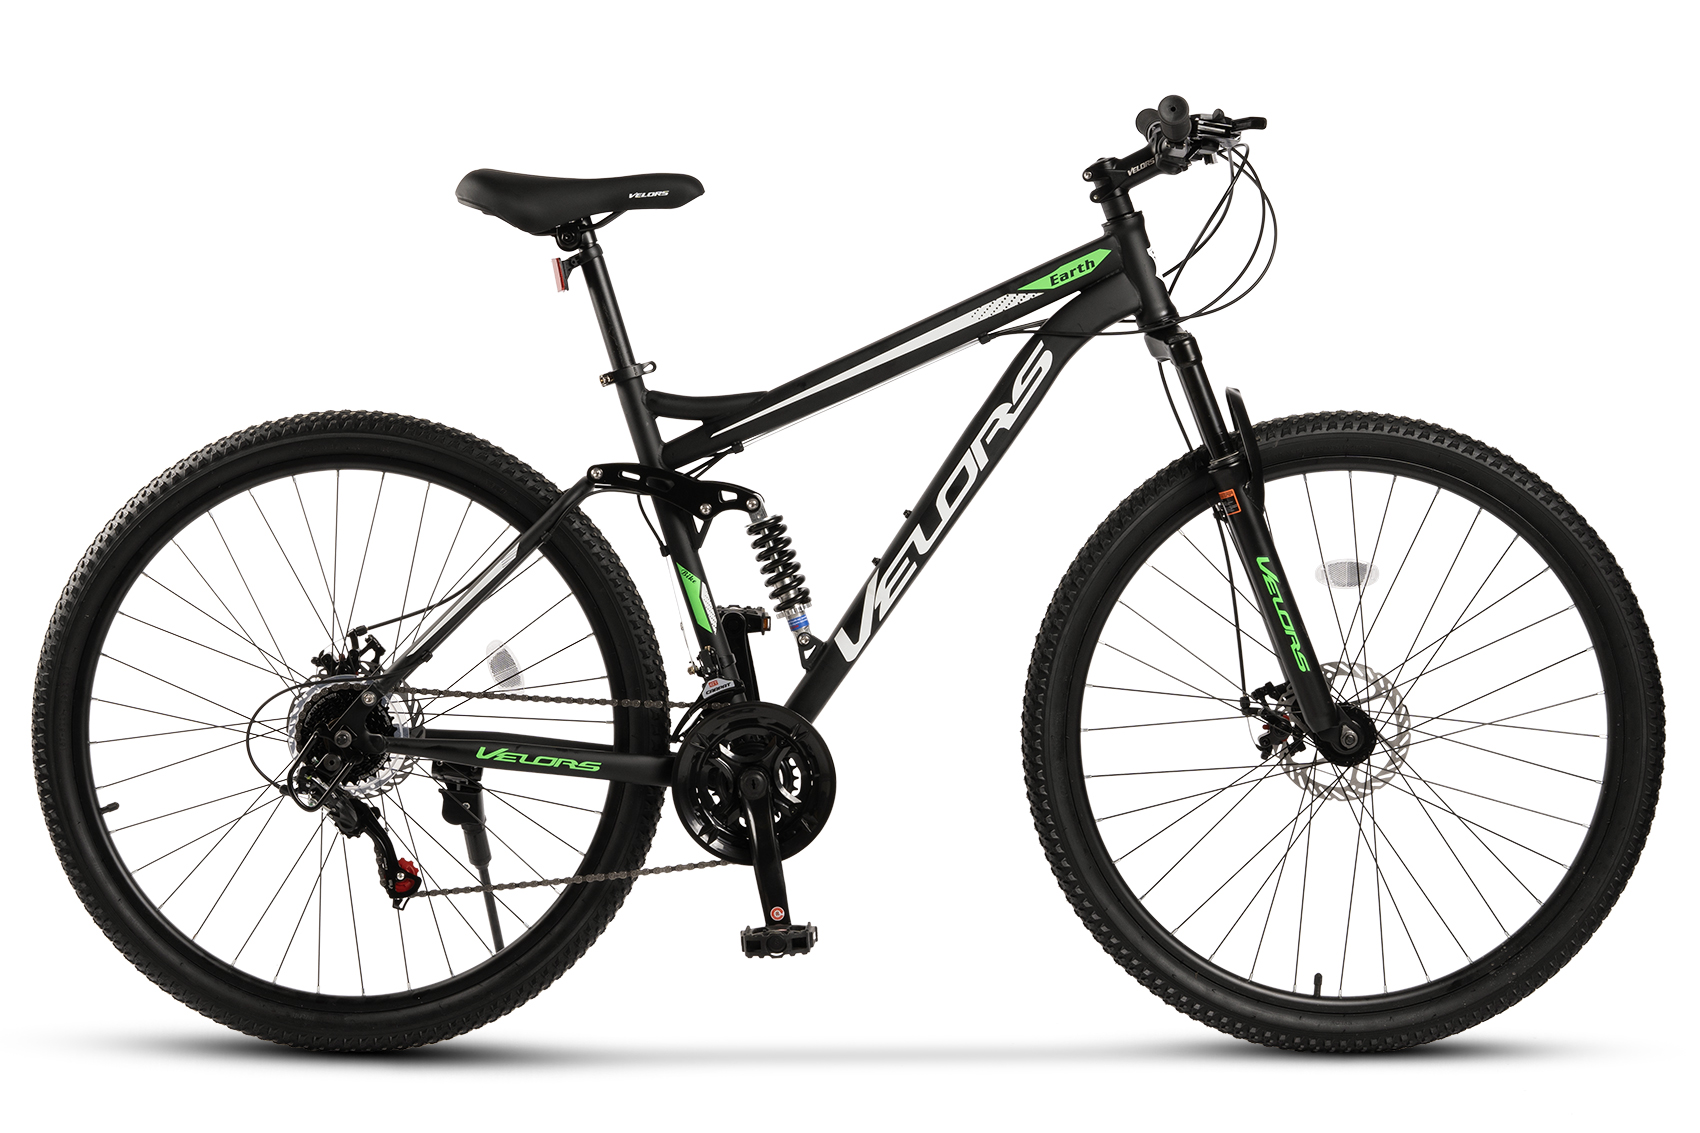 PROMO BICICLETE - Bicicleta MTB Full-Suspension Velors Earth V2960G 29", Negru/Alb/Verde, https:carpatsport.ro